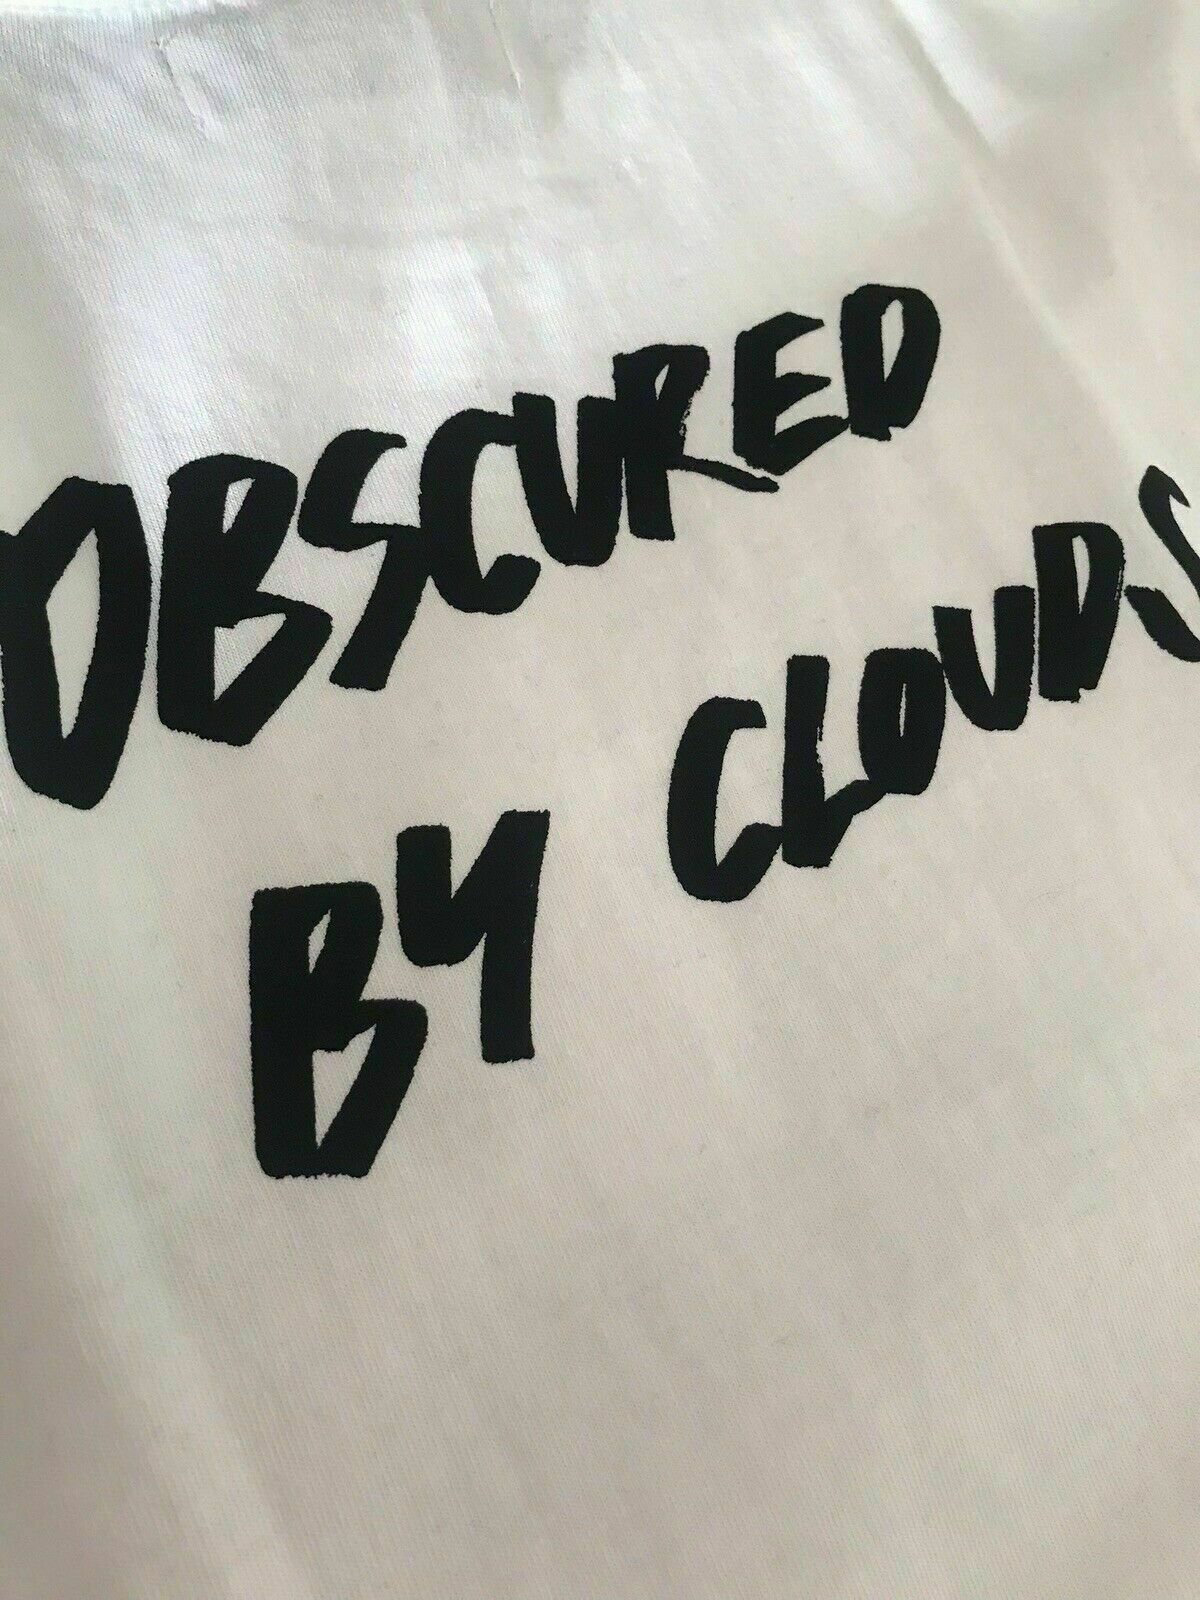 2018 Kiko KOSTADINOV Obscured by Clouds White logo T-shirt Tee 